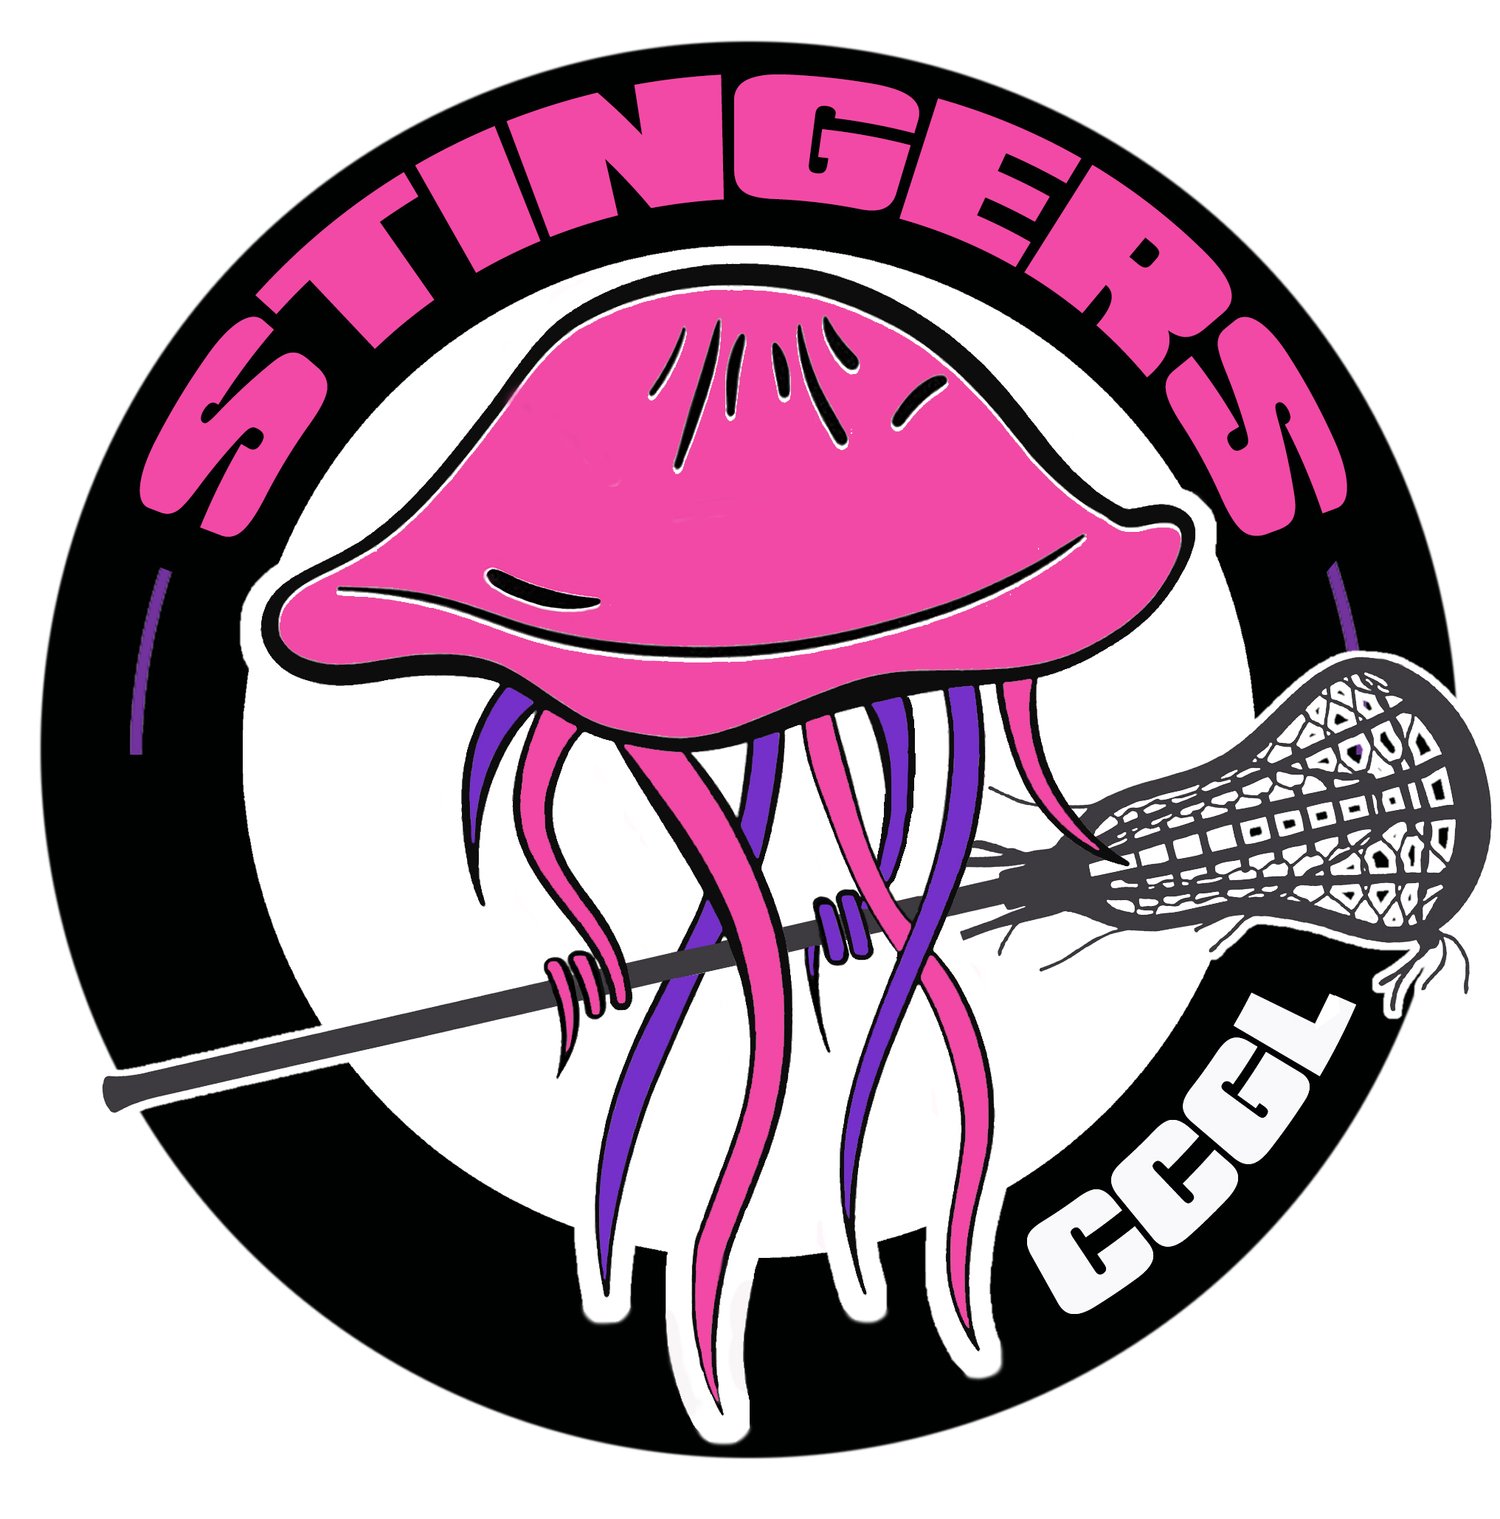 Stingers Lax Cape Cod - SILVER SPONSOR